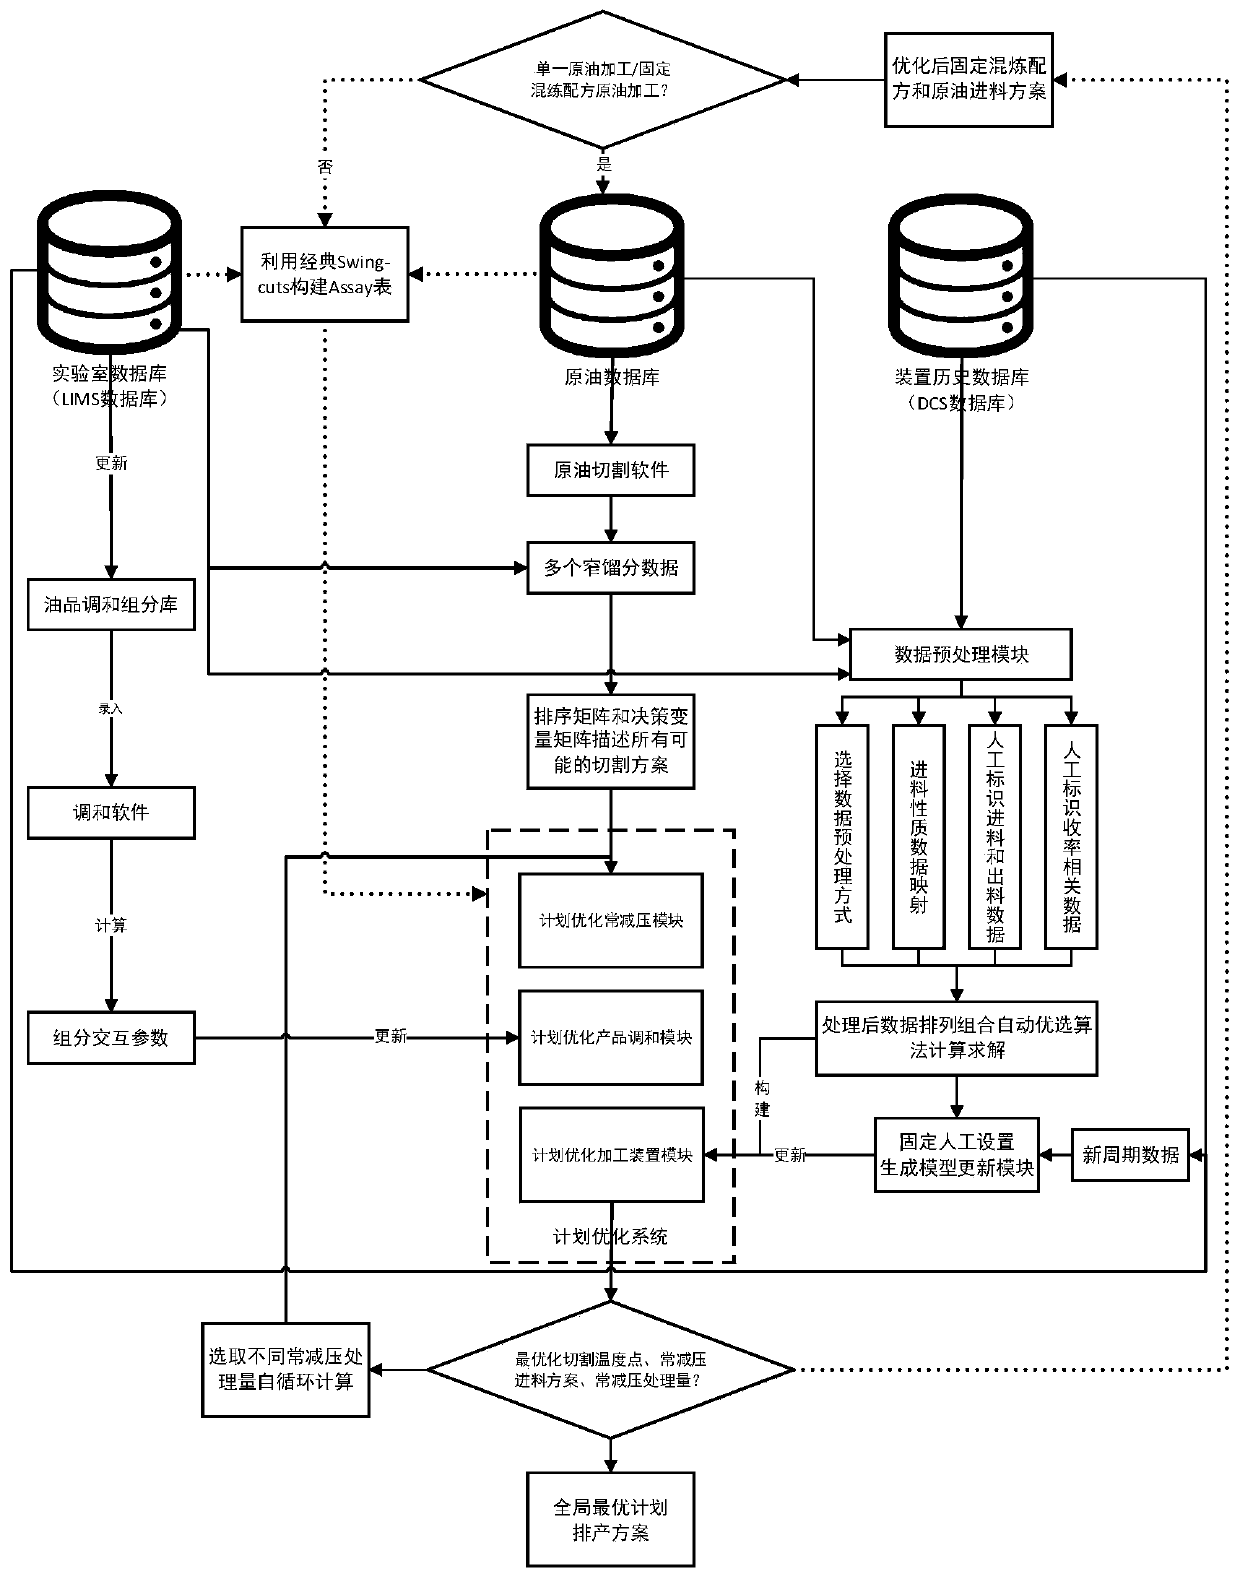 Data-driven petrochemical enterprise plan optimization method